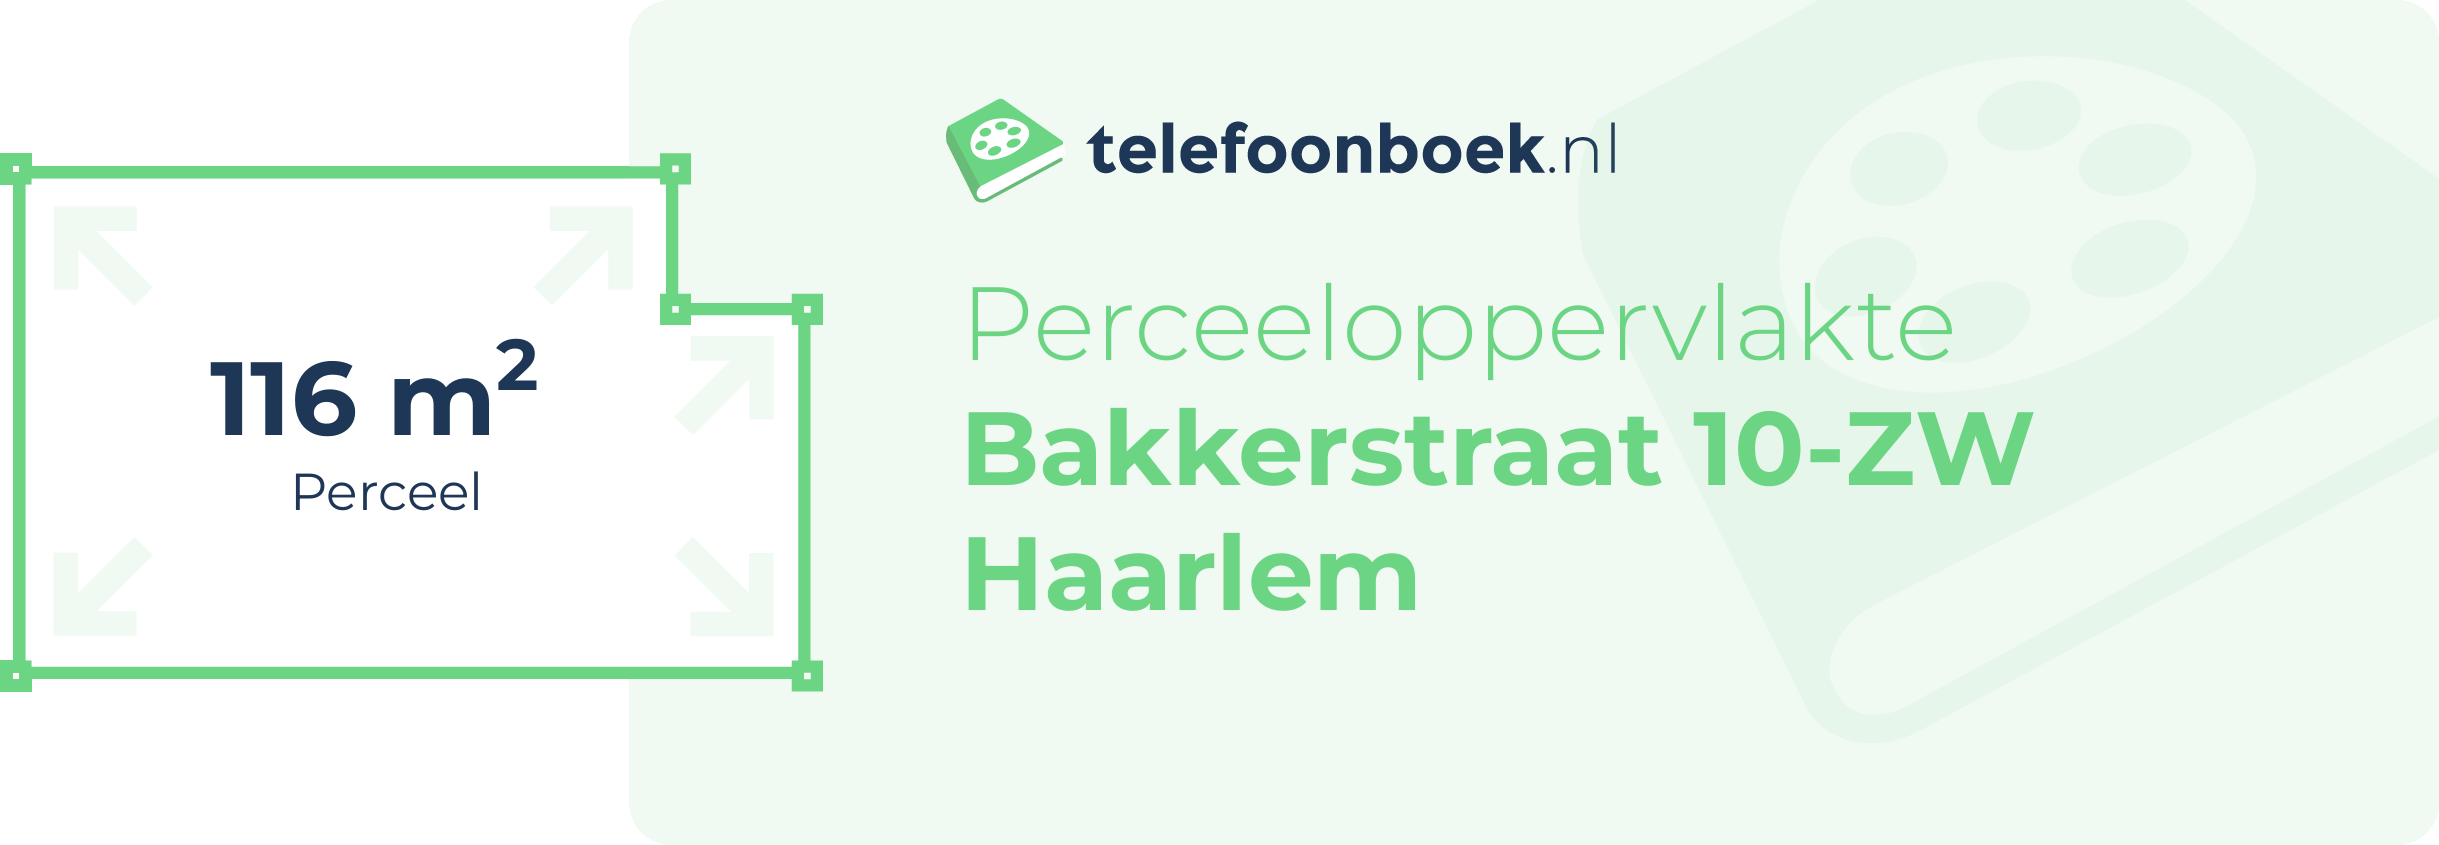 Perceeloppervlakte Bakkerstraat 10-ZW Haarlem